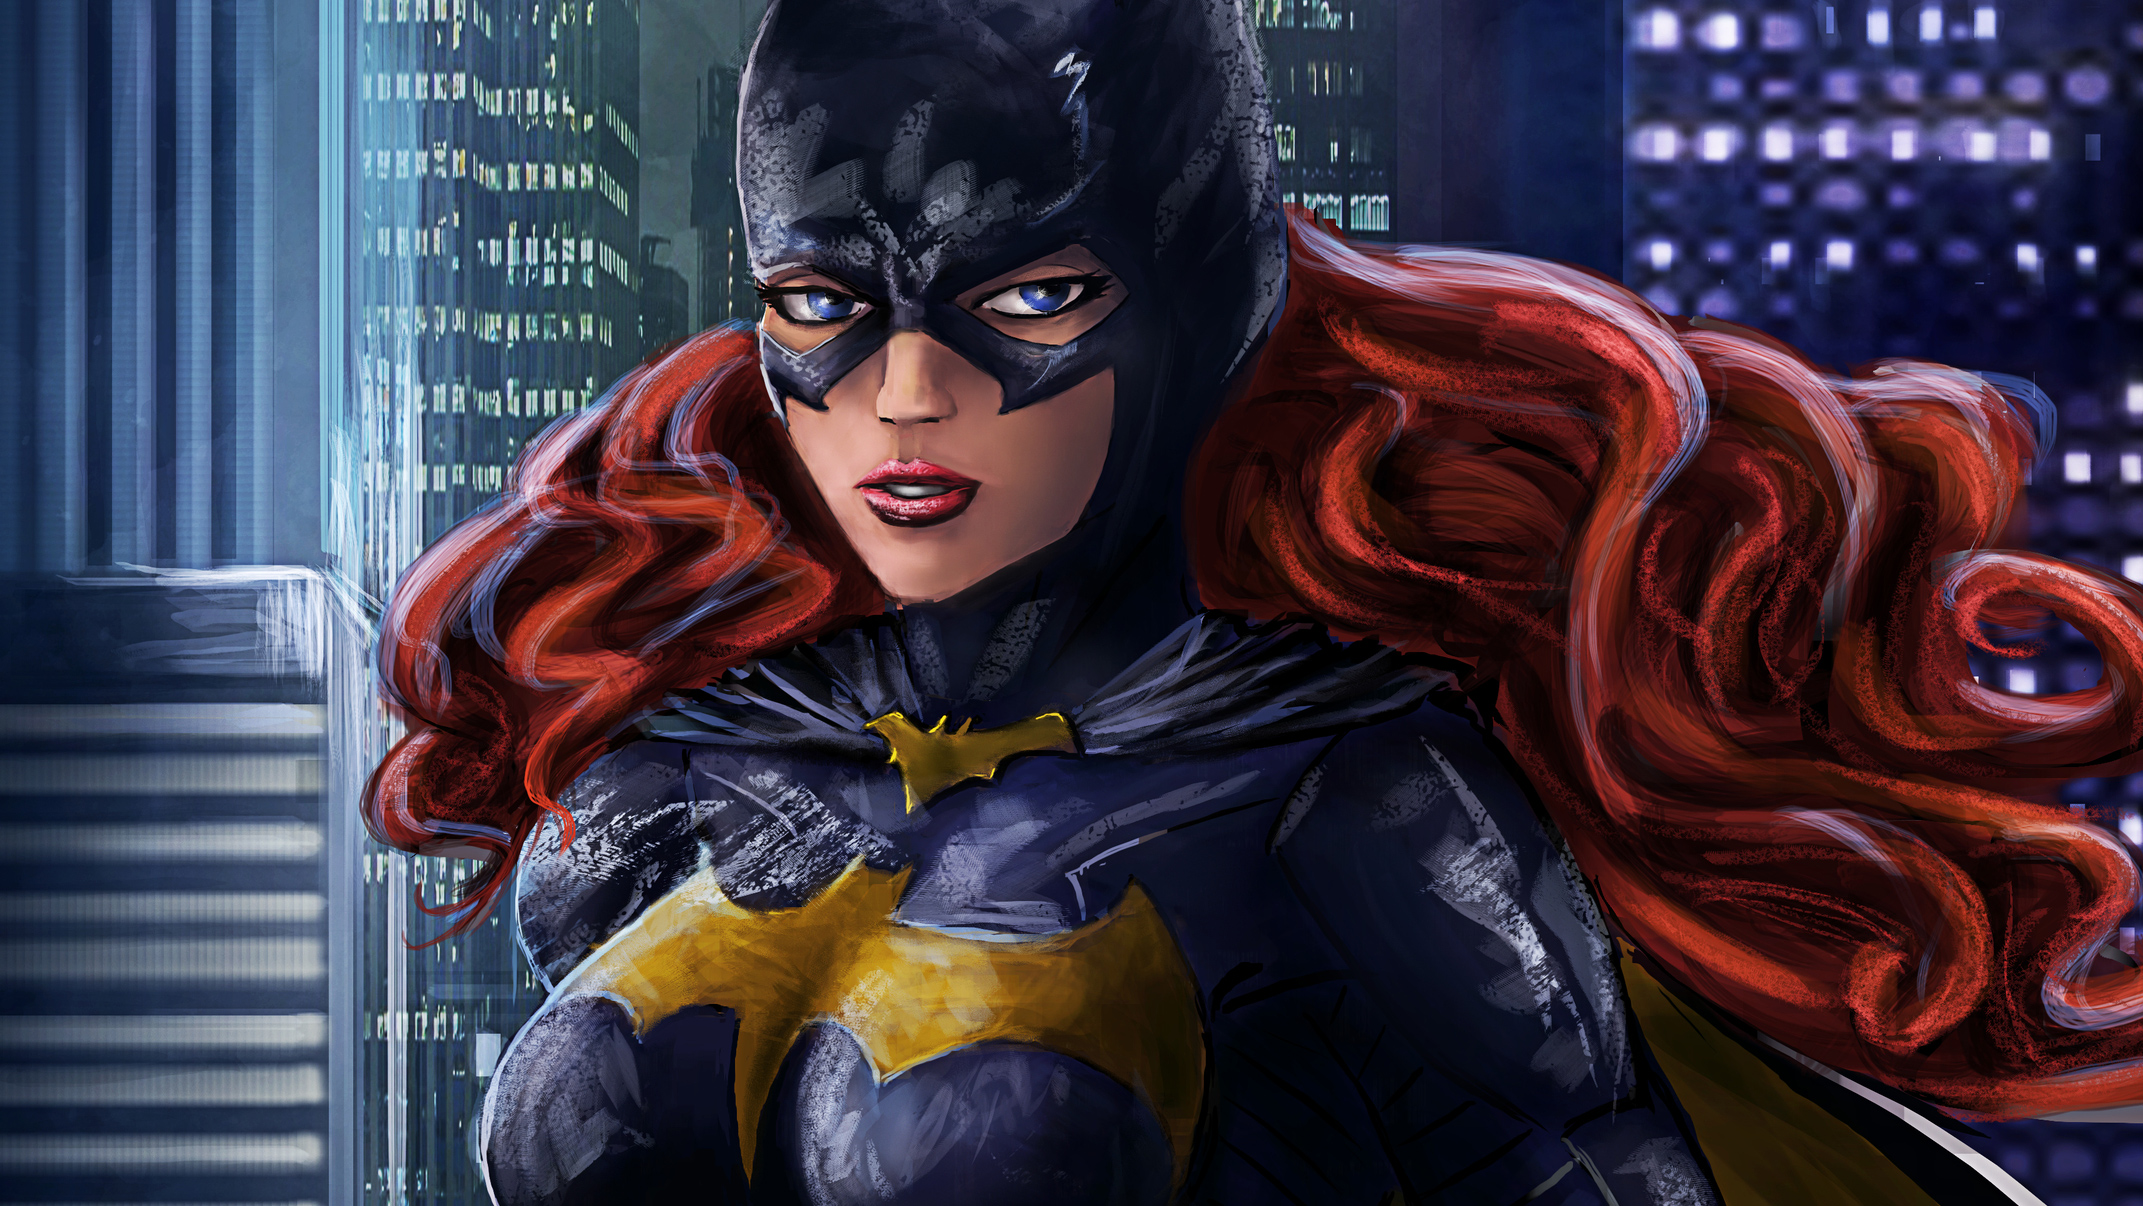 Descarga gratis la imagen Historietas, The Batman, Dc Comics, Batgirl en el escritorio de tu PC